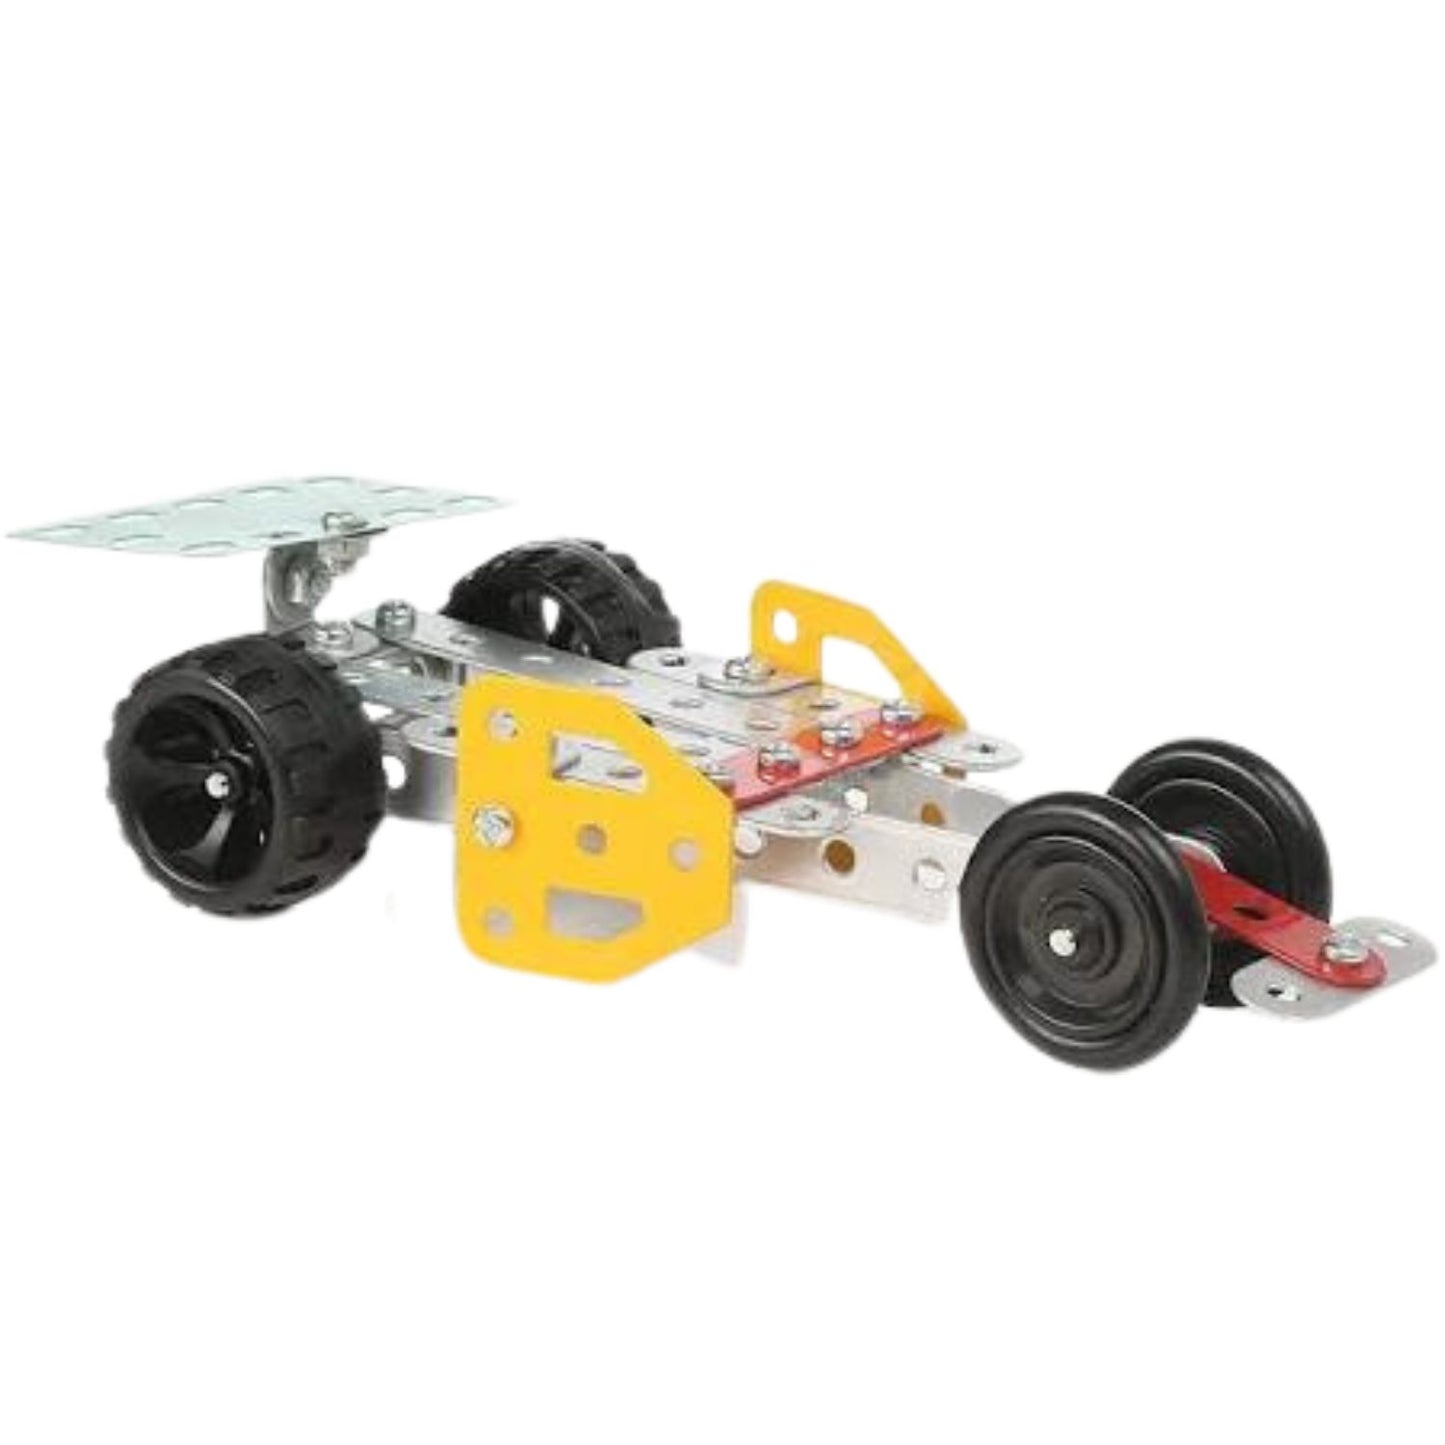 Zephyr Mechanix 0 - STEM Educational DIY Mechanical Engineering Game - 98 pcs, Build 5 Different Models, Ideal for Kids Age 7+